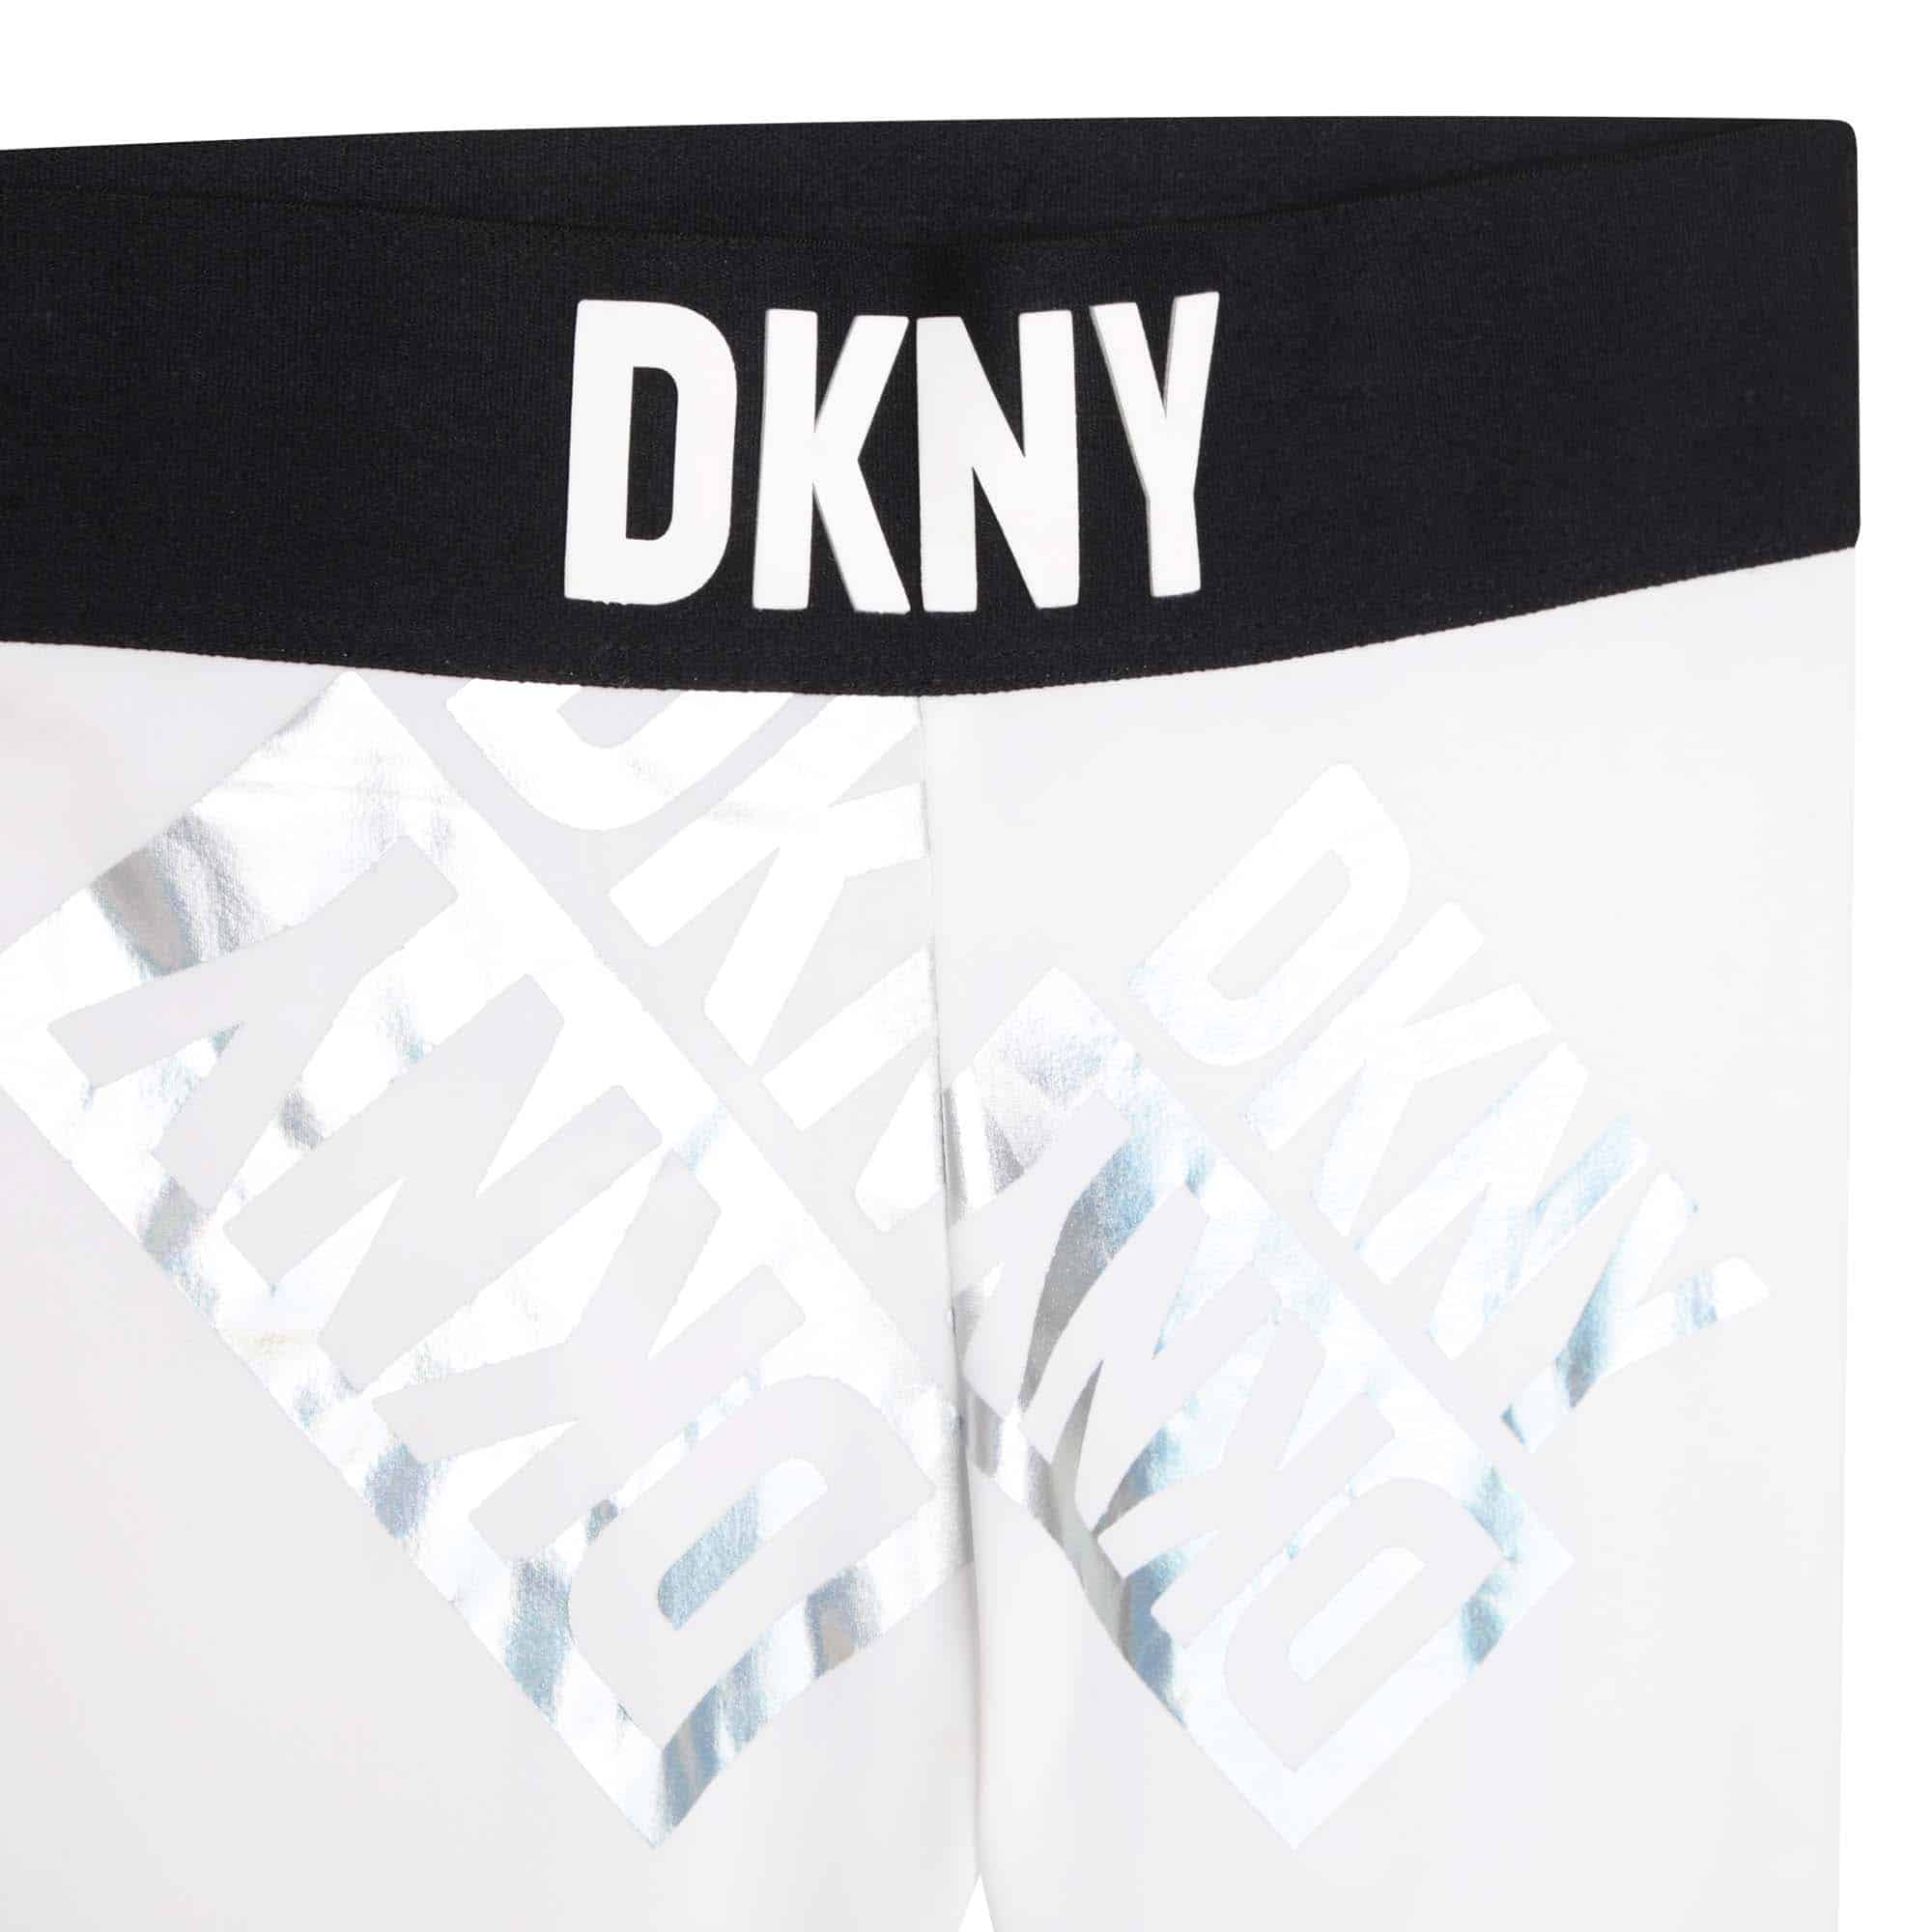 DKNY girls black and white leggings close up